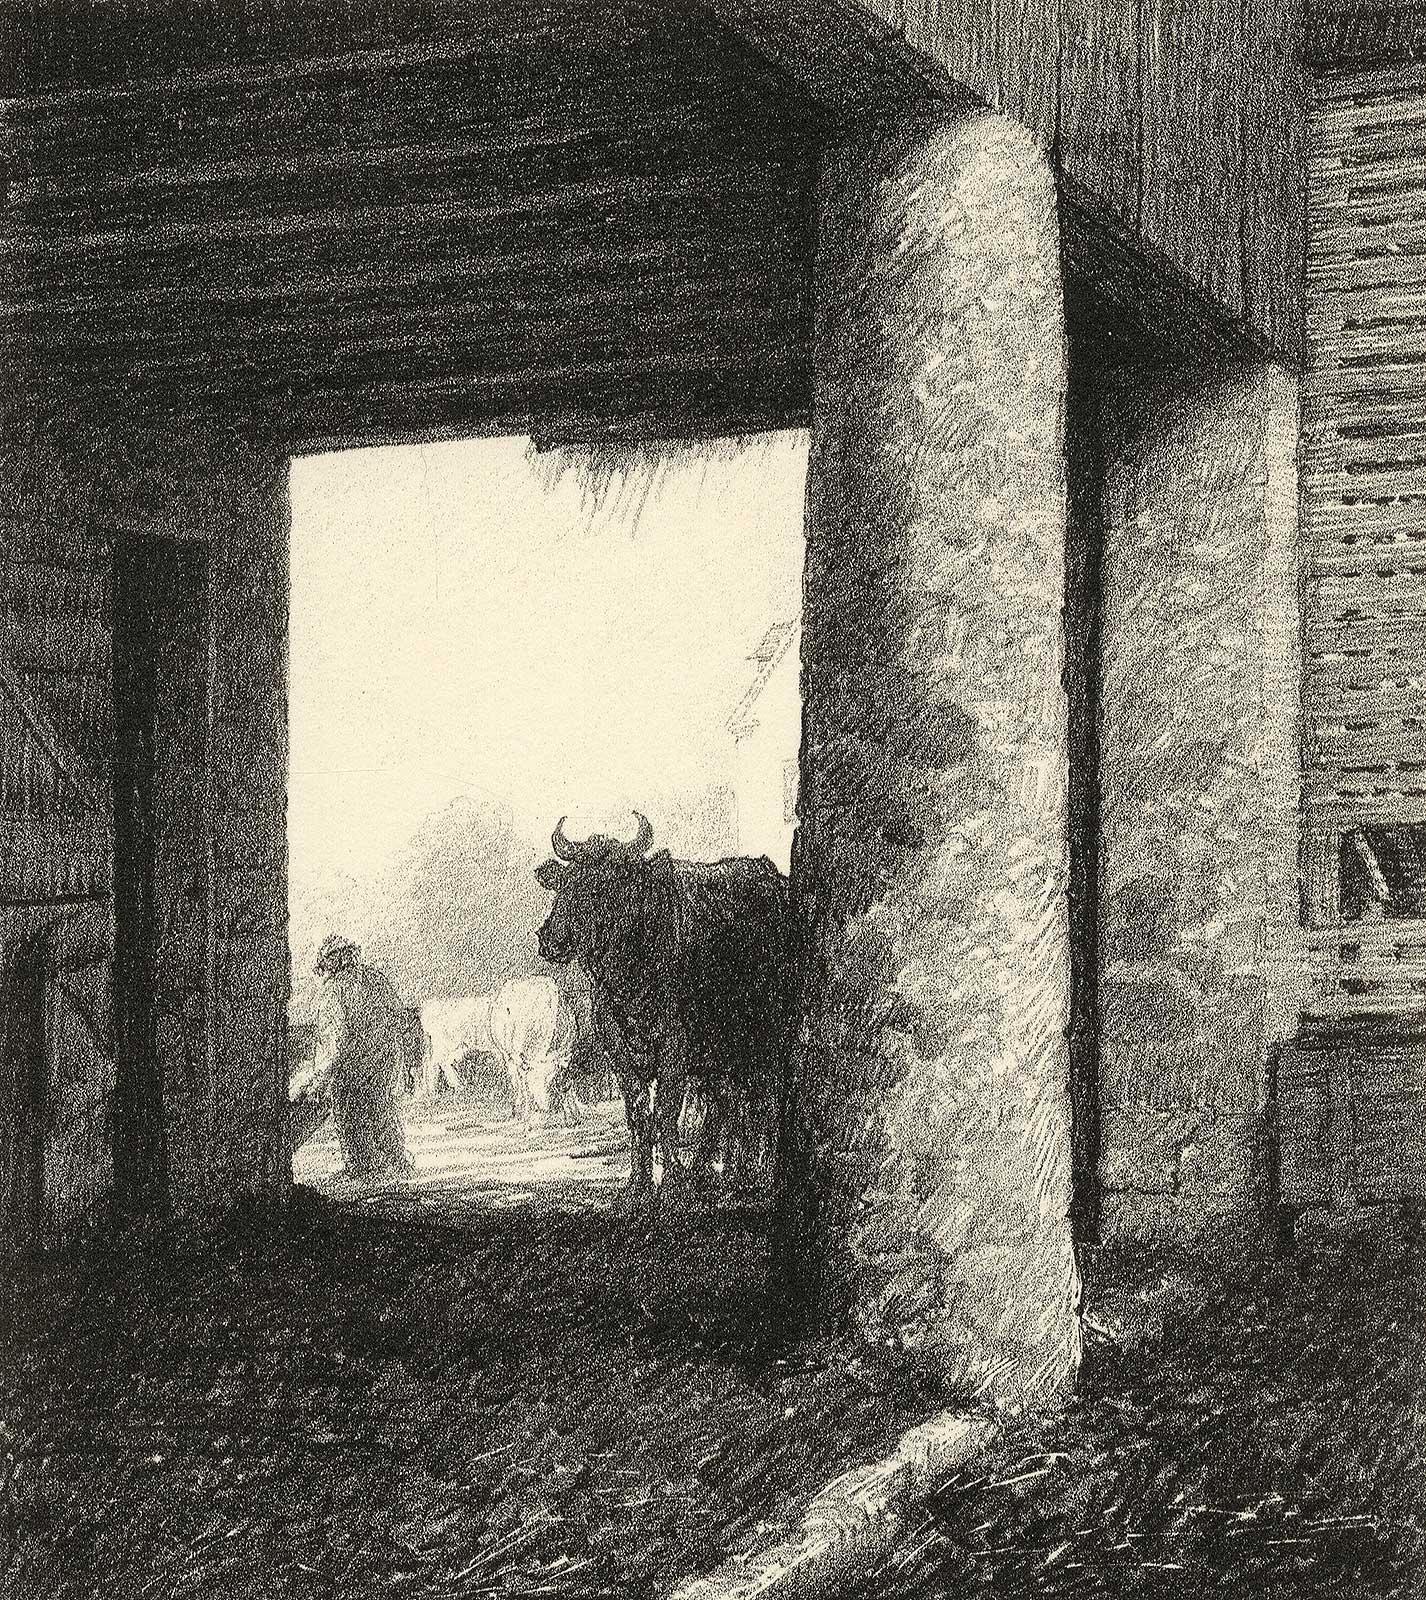 Albert Winslow Barker Figurative Print - The Barn (a romantic look at the rural landscape of an earlier American era)